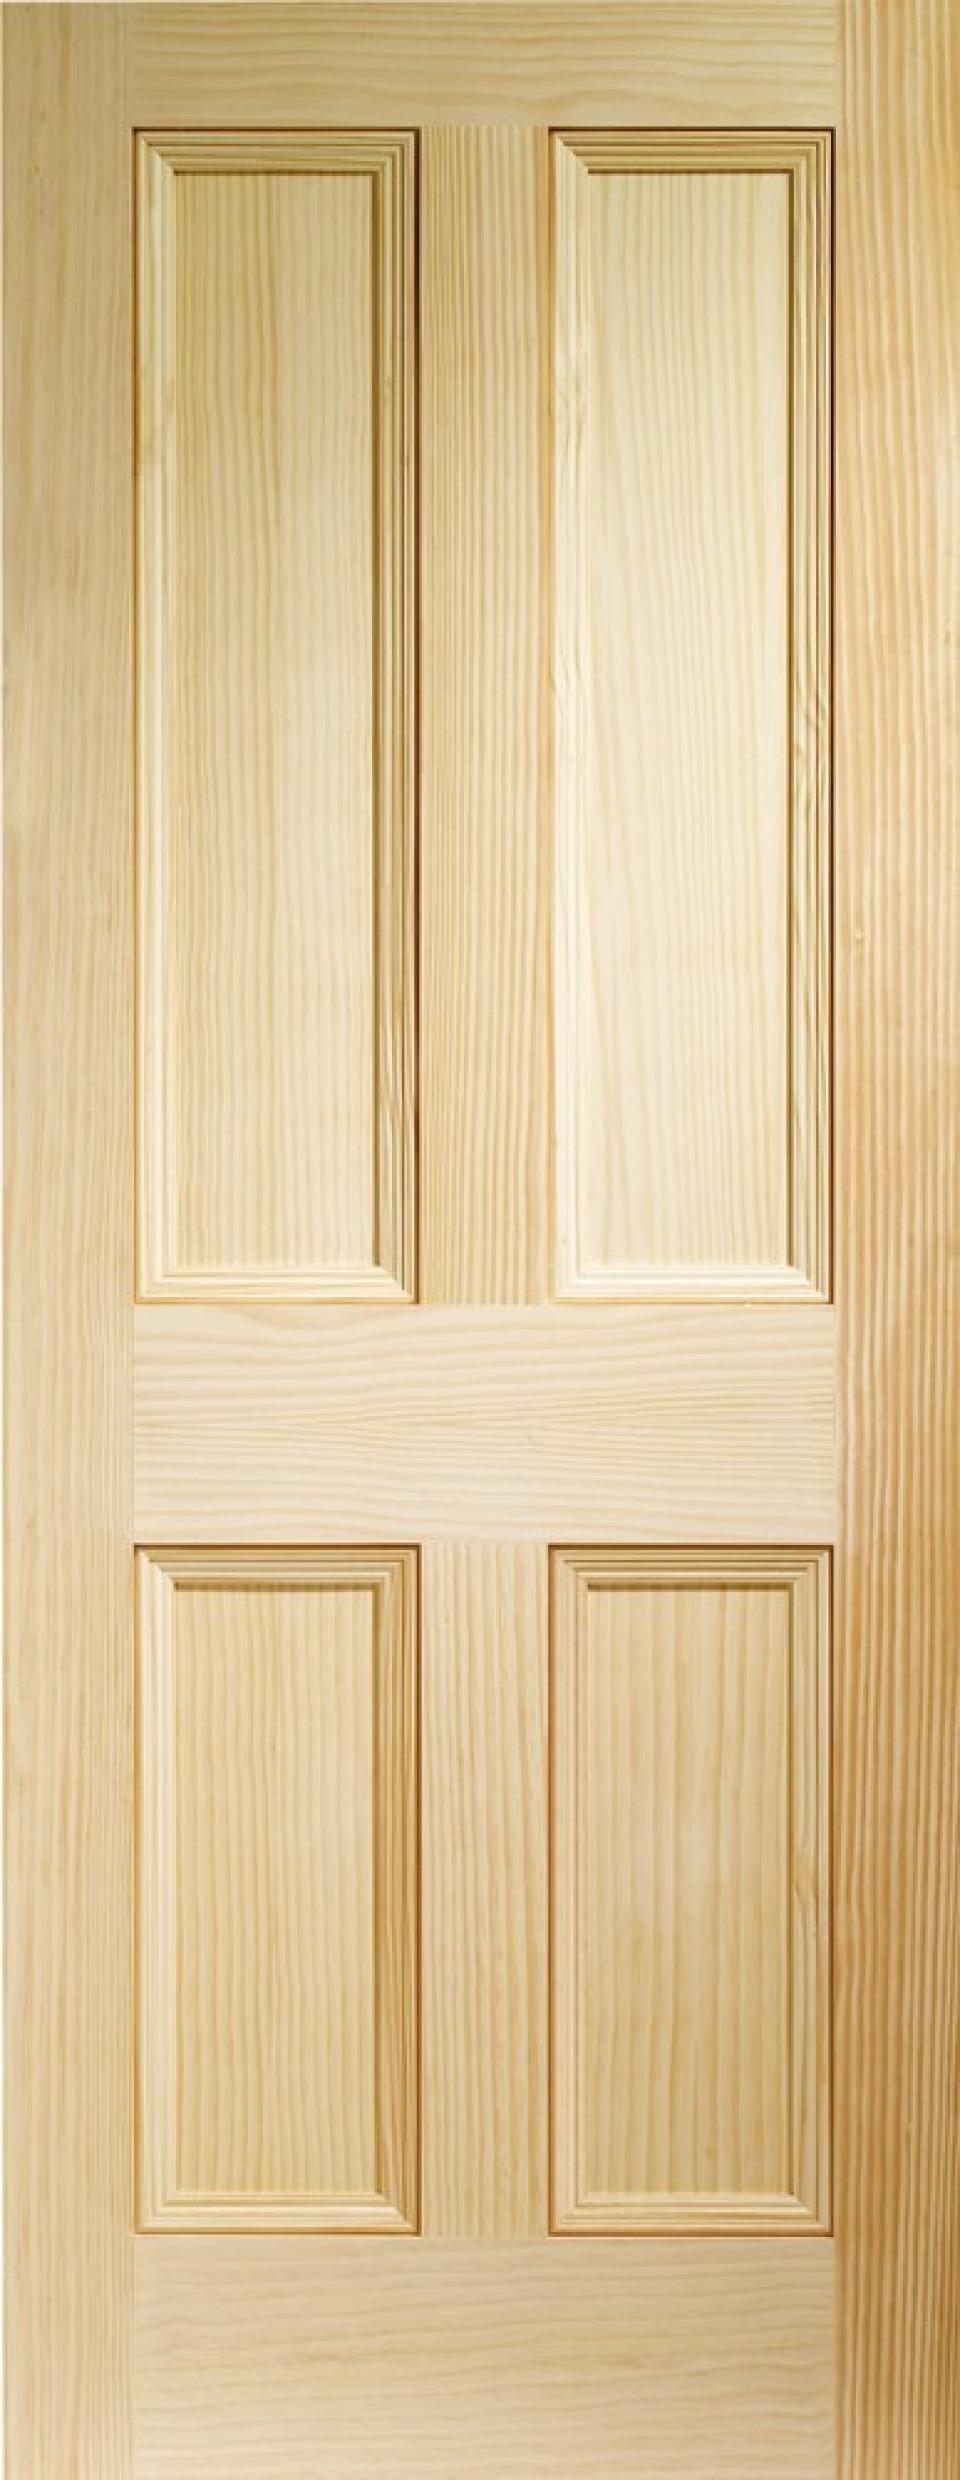 Vert Grain Clear Pine Edw 4 Panel 2032 x 813 x 35mm (32)